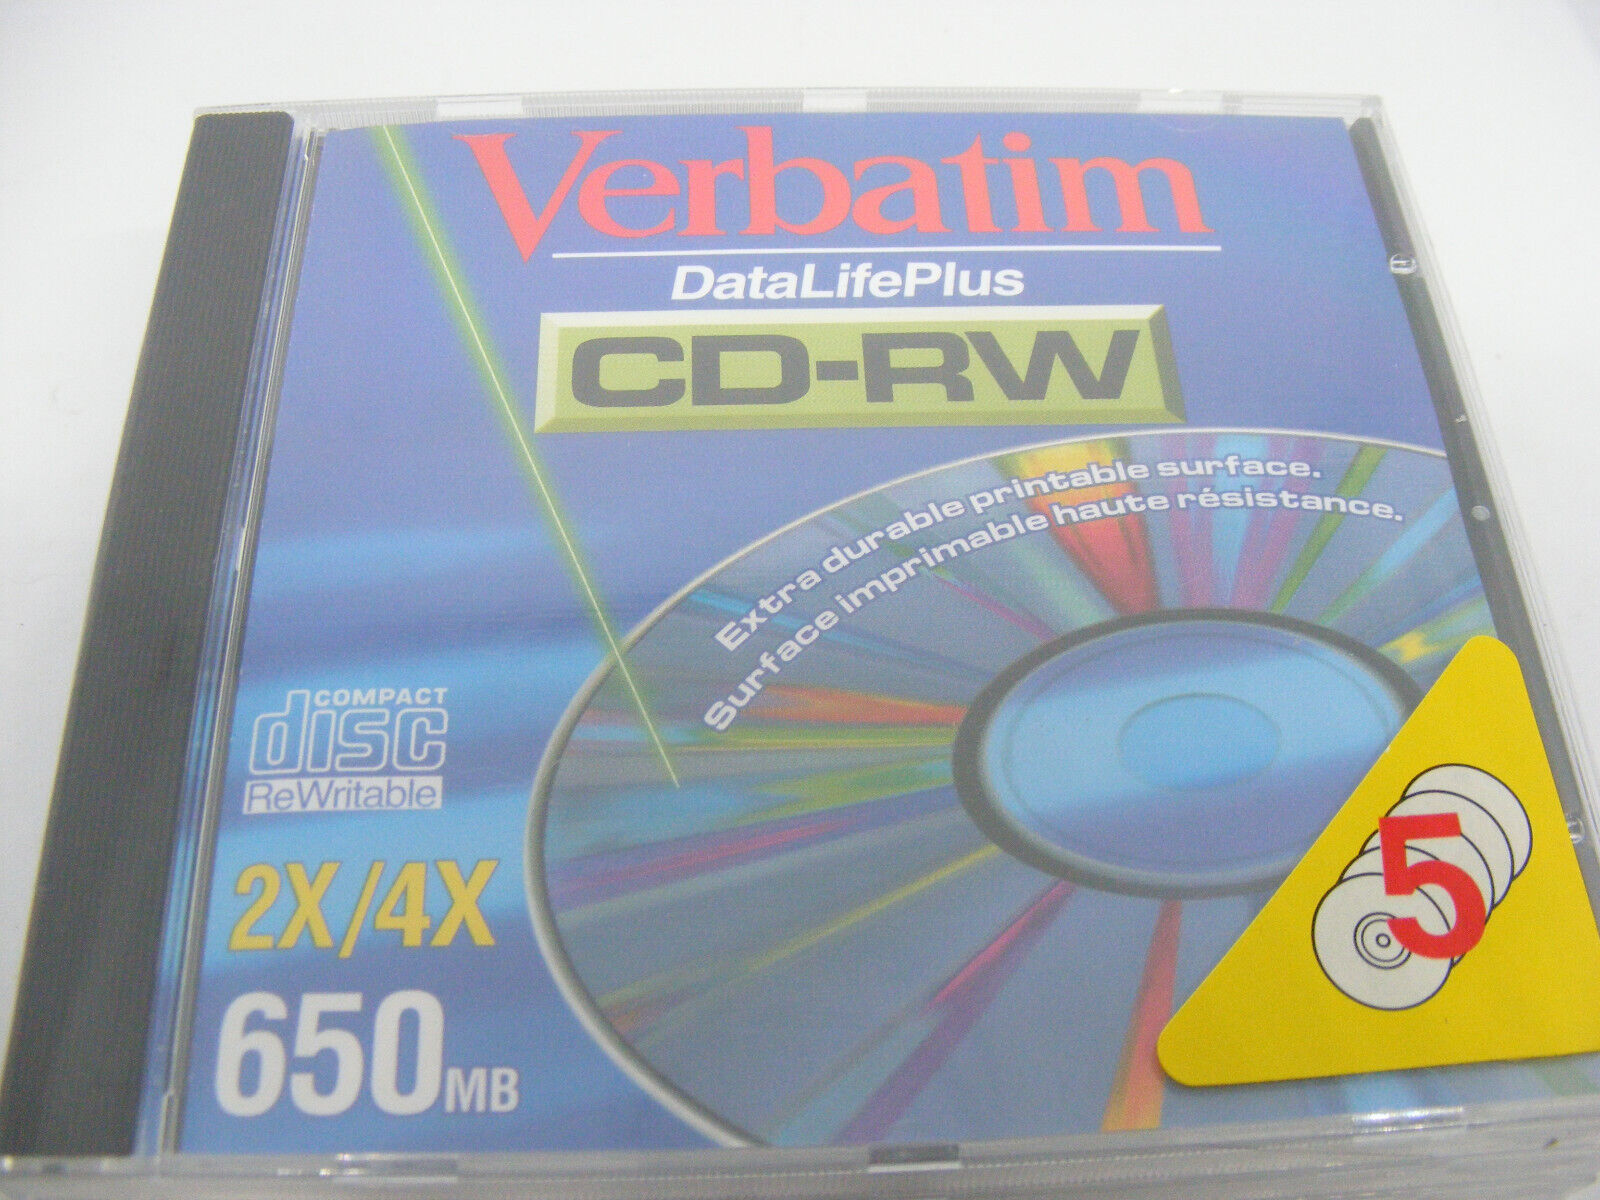 Verbatim DatalifePlus CD-RW 2x/4x 650mb 5 Disks new